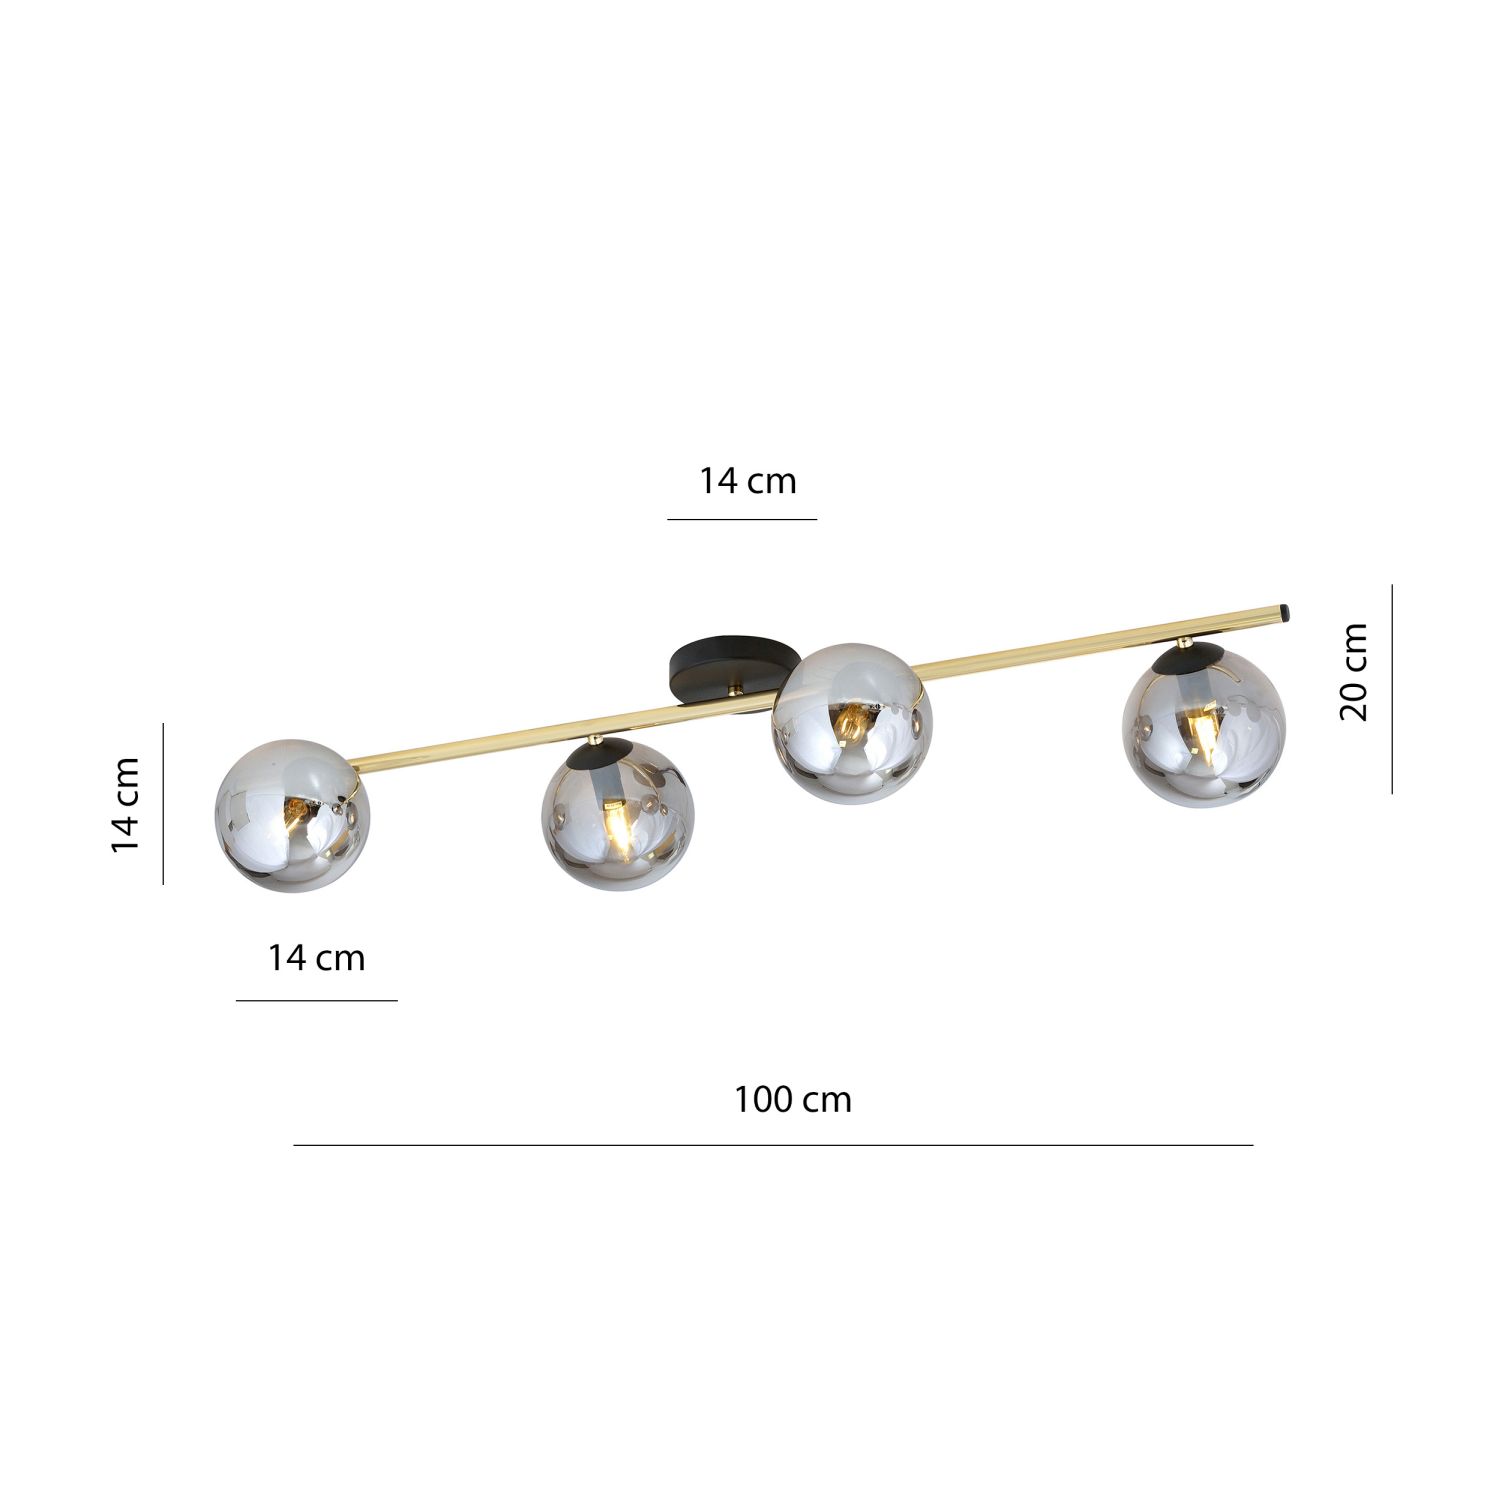 Deckenlampe 100 cm lang Rauchglas Metall 4x E14